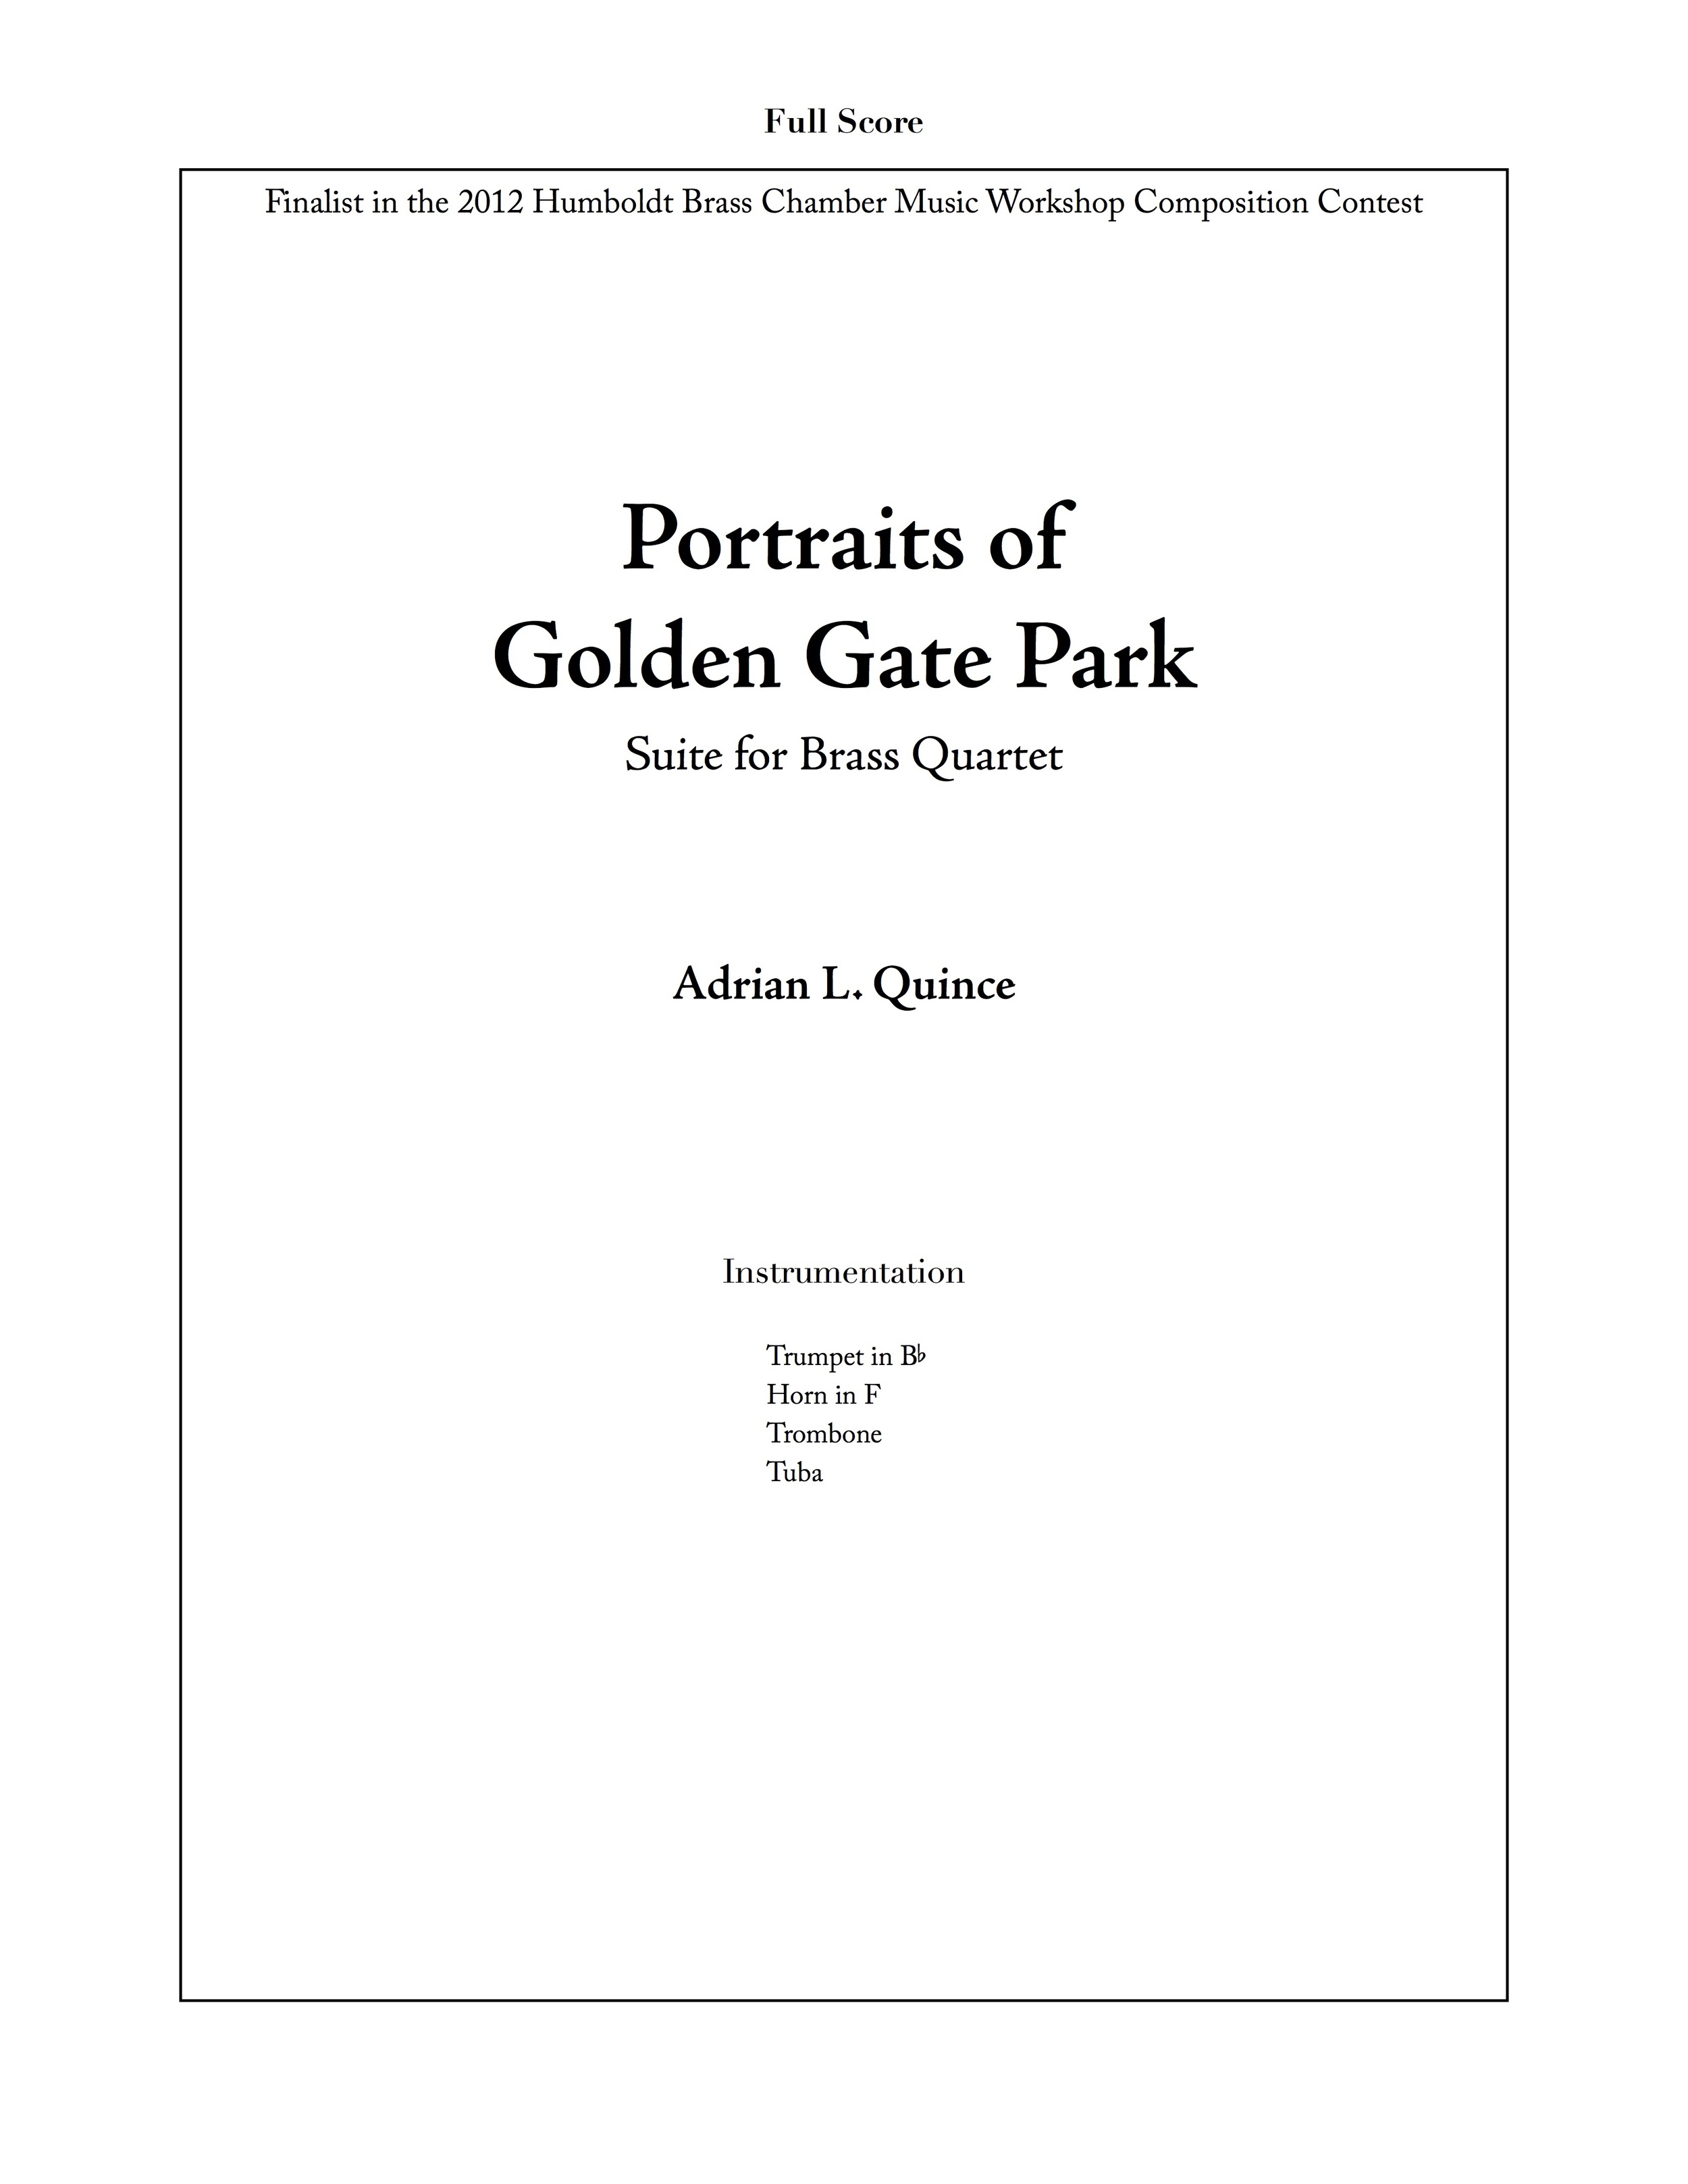 Portraits of Golden Gate Park 1.jpg